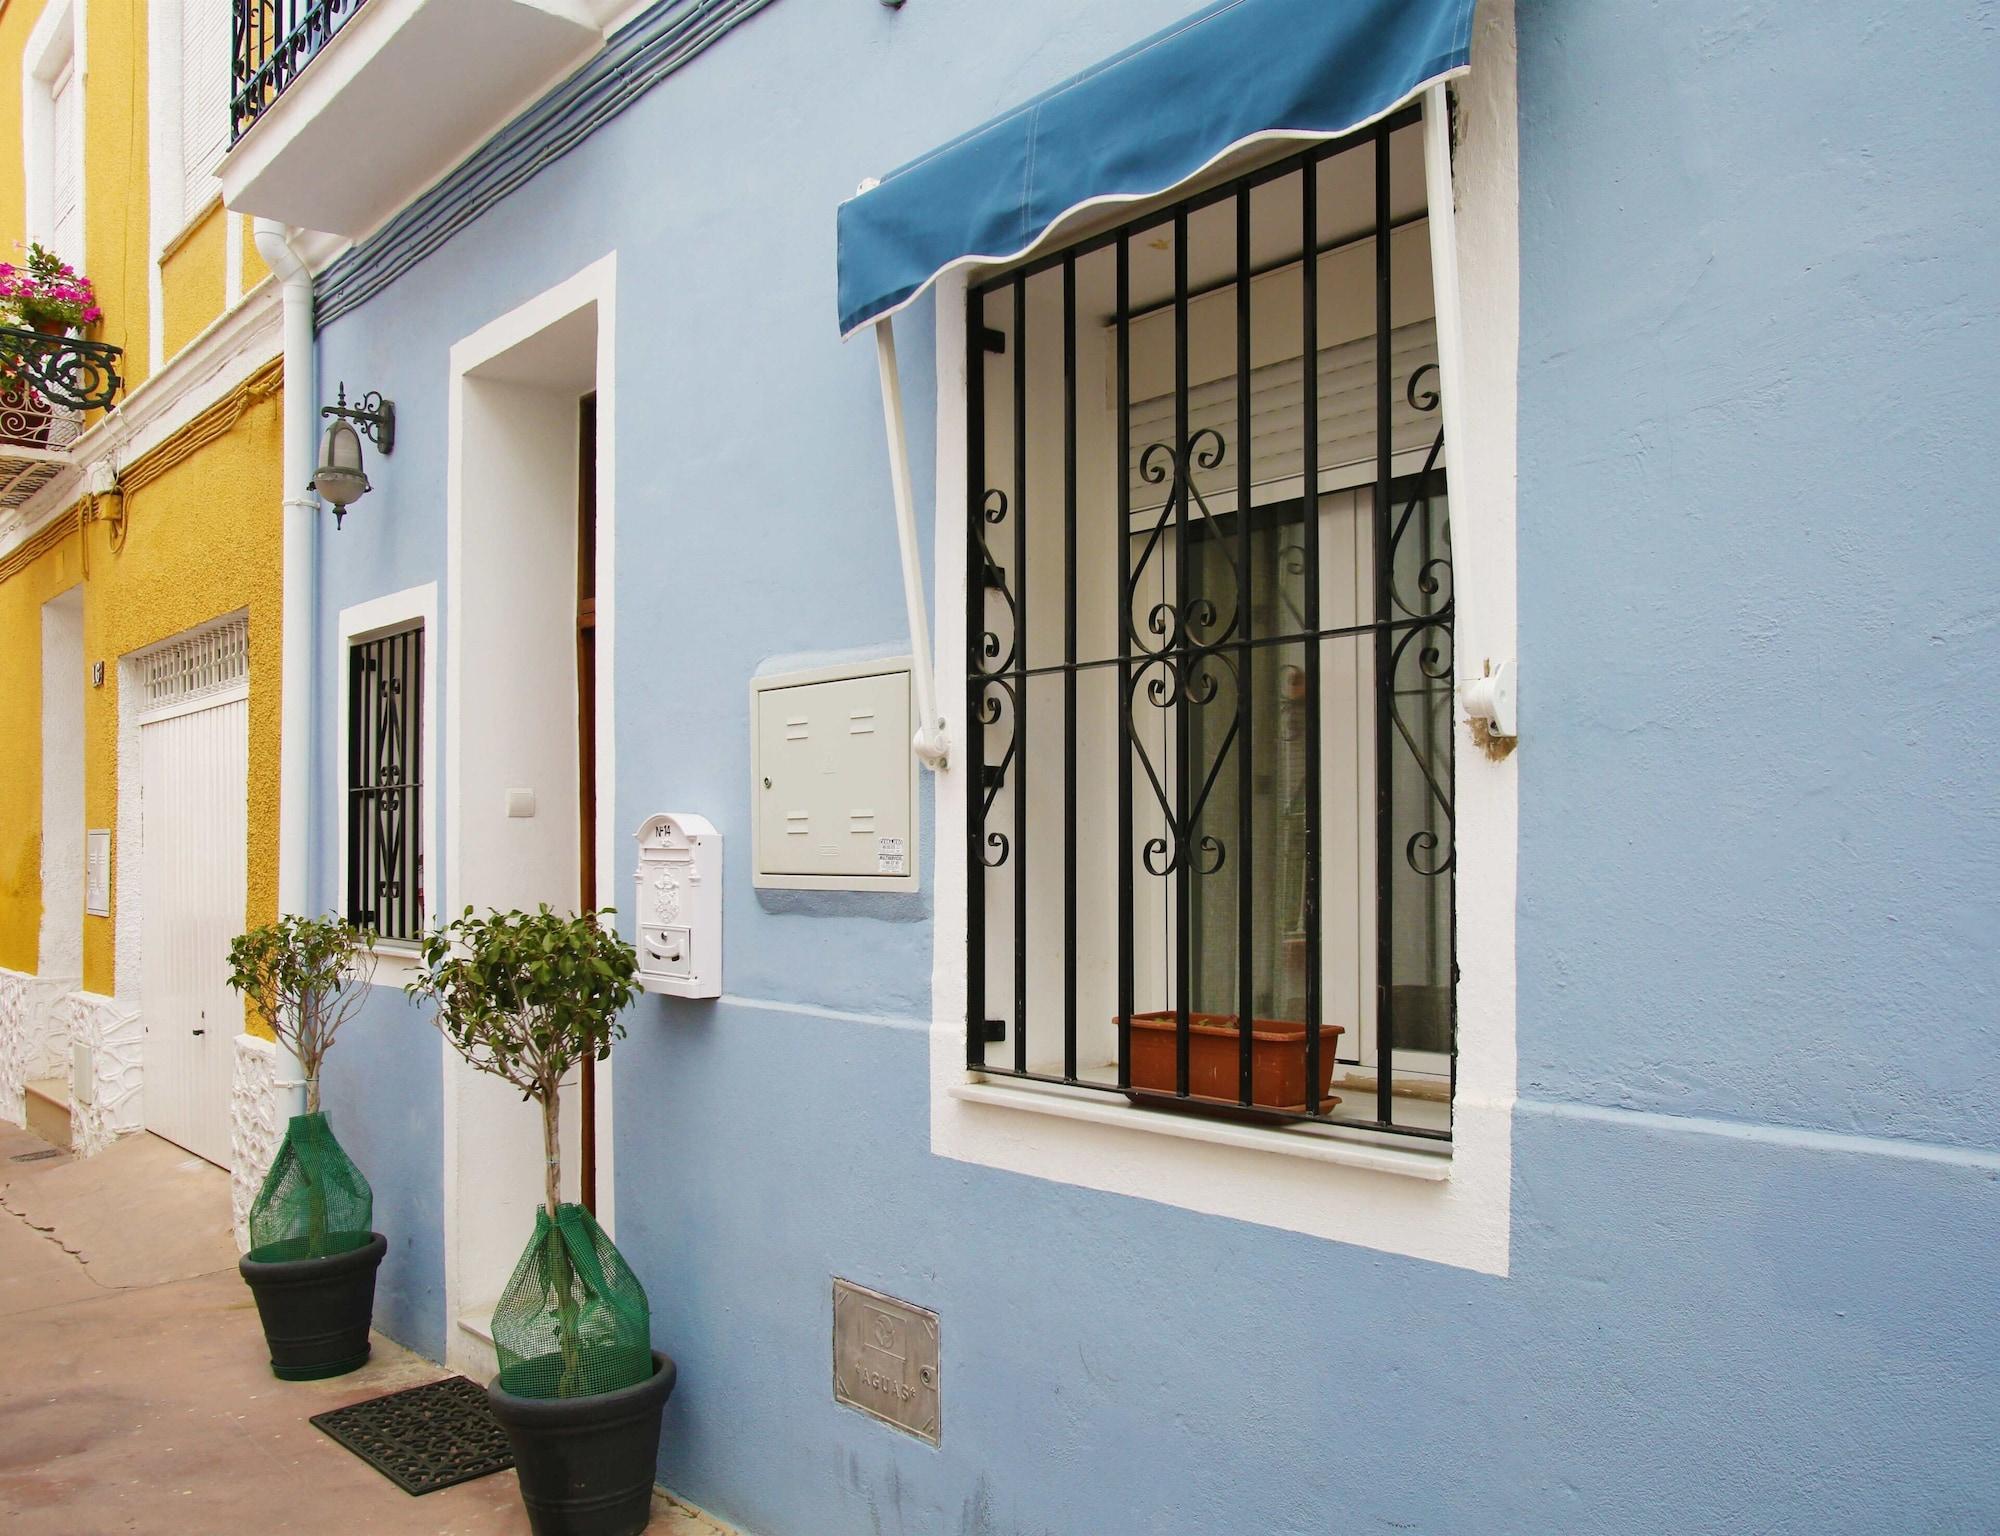 Malaga Lodge Guesthouse Exterior foto